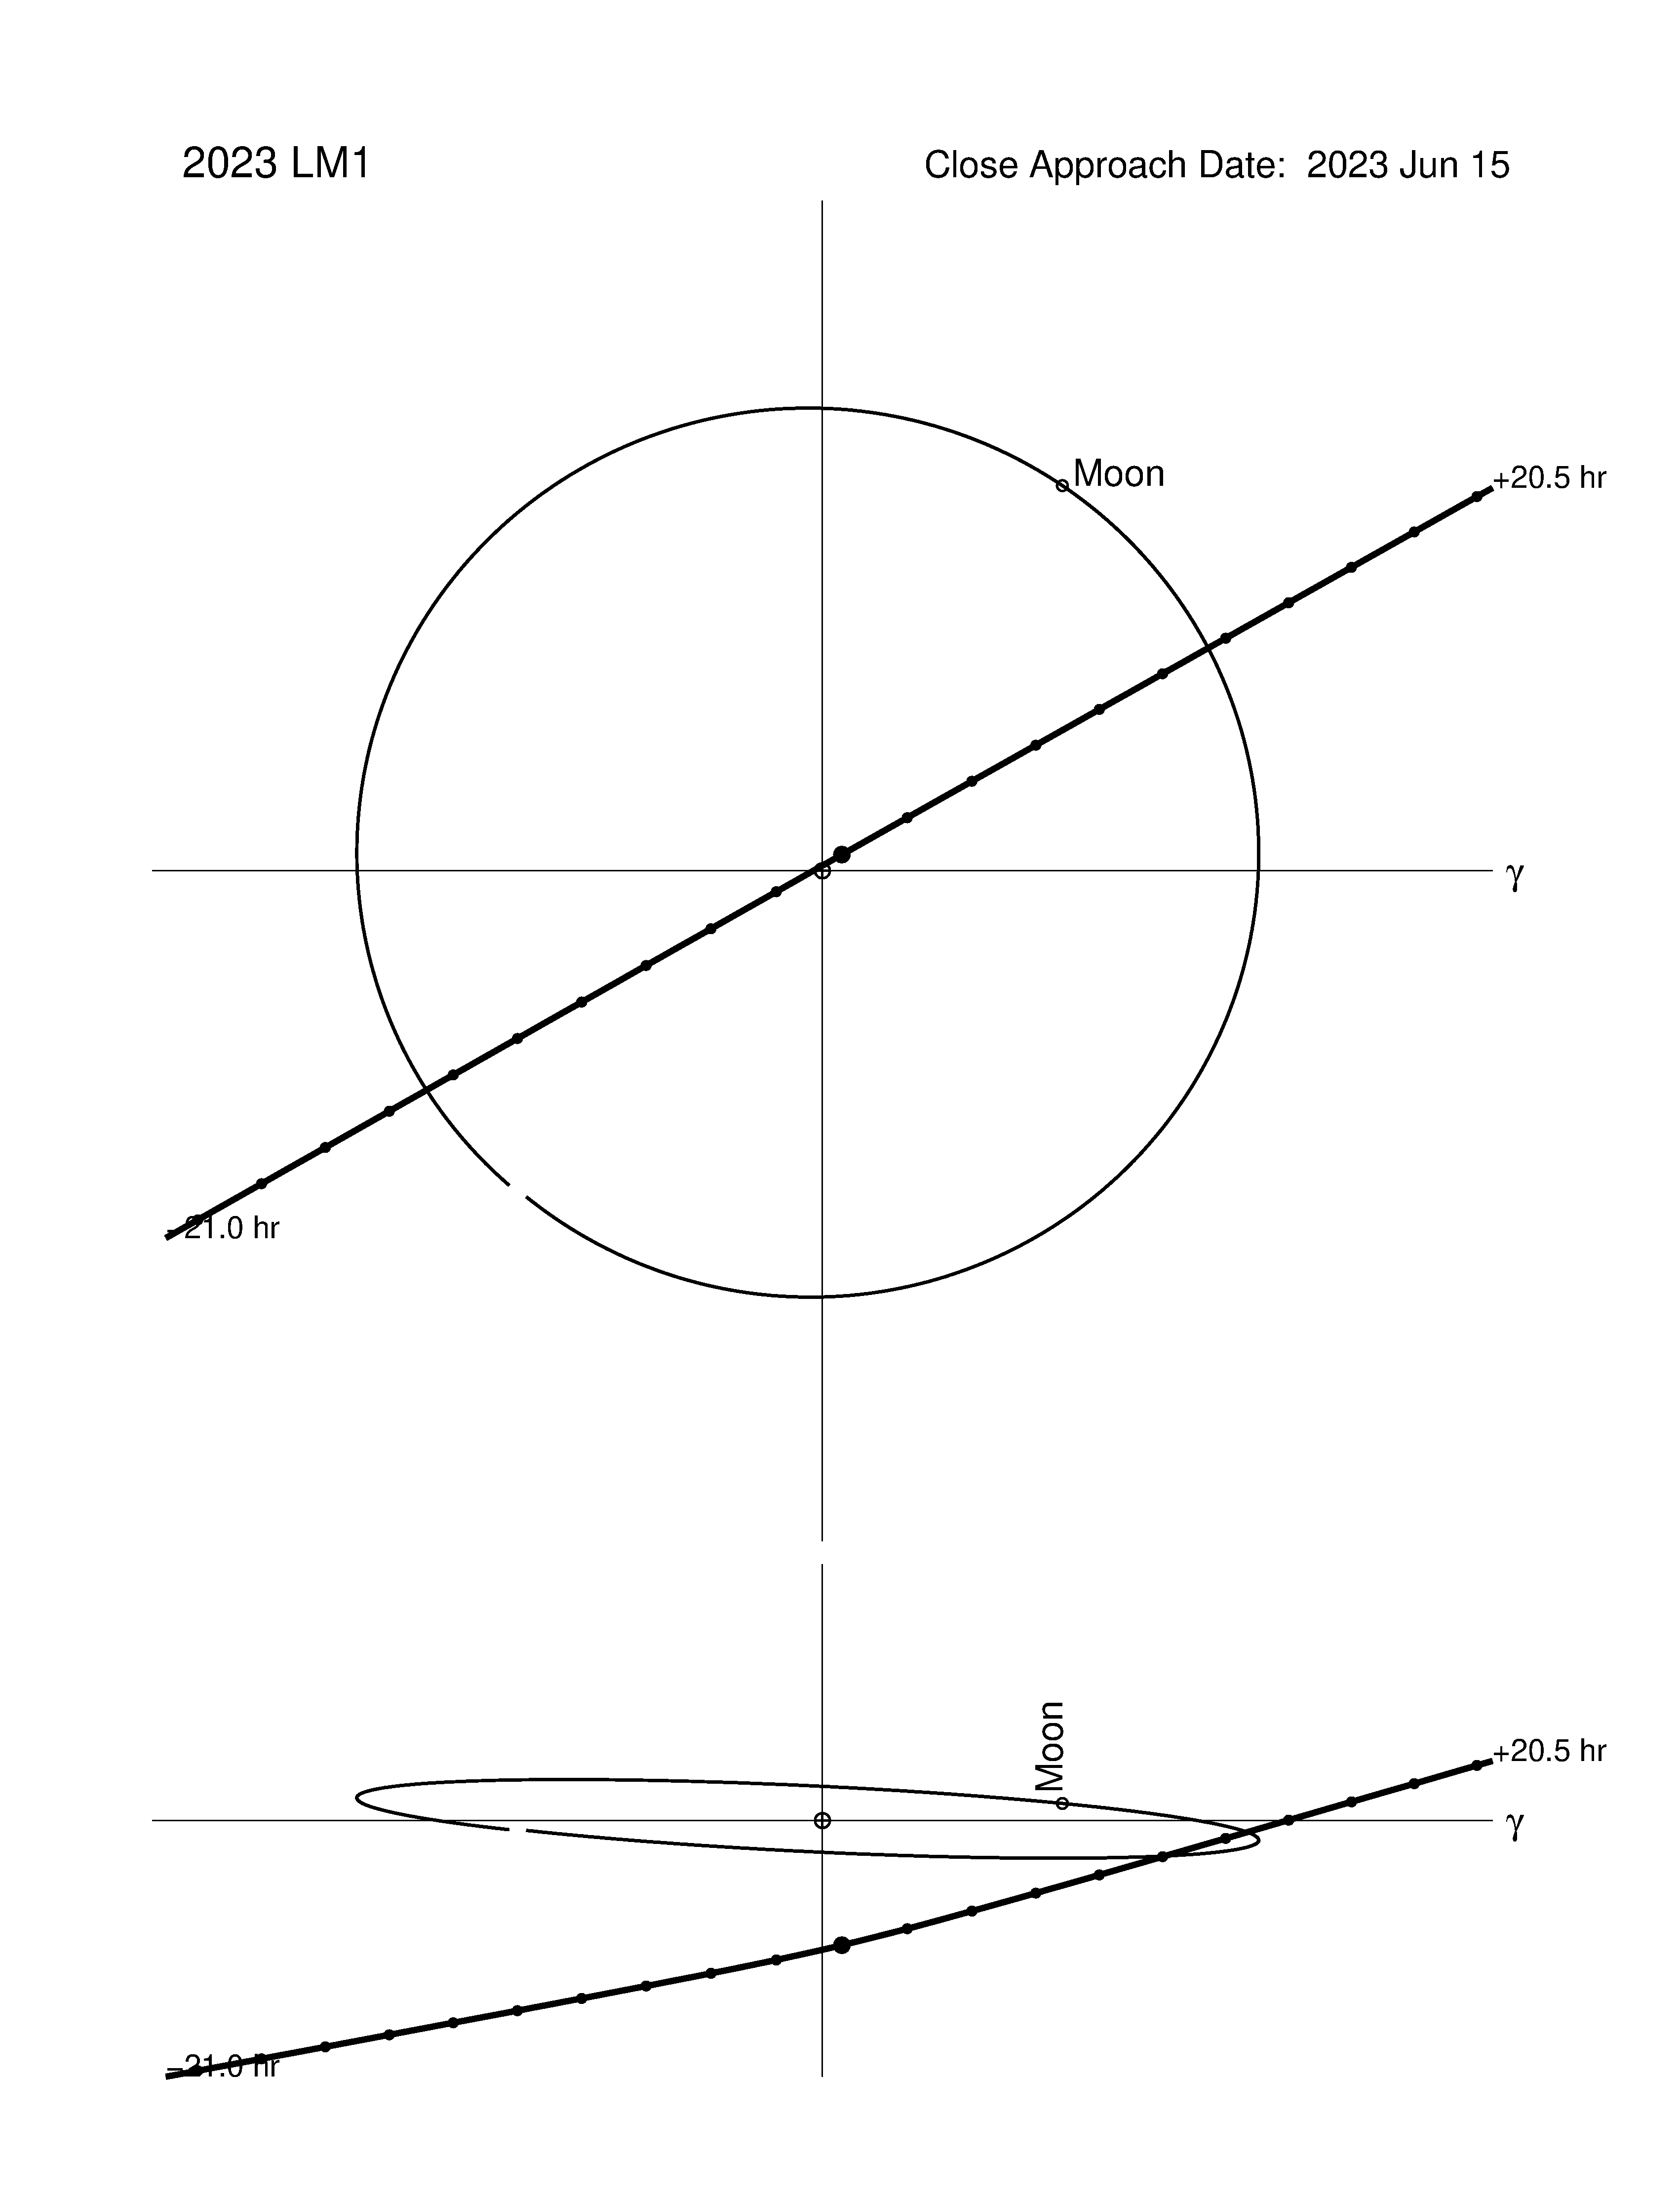 Near-Earth trajectory of 2023 LM1